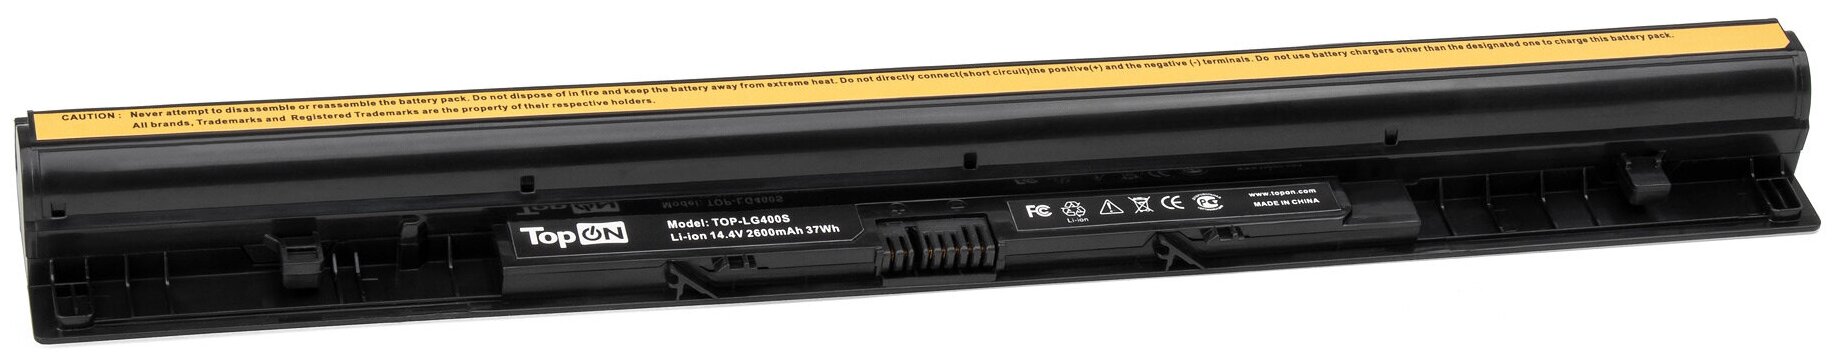 Аккумулятор для ноутбука Lenovo IdeaPad G400S G500S S410P S510P Z710 G50-30 G50-70 Series 144V 2600mAh L12L4A02 90202869